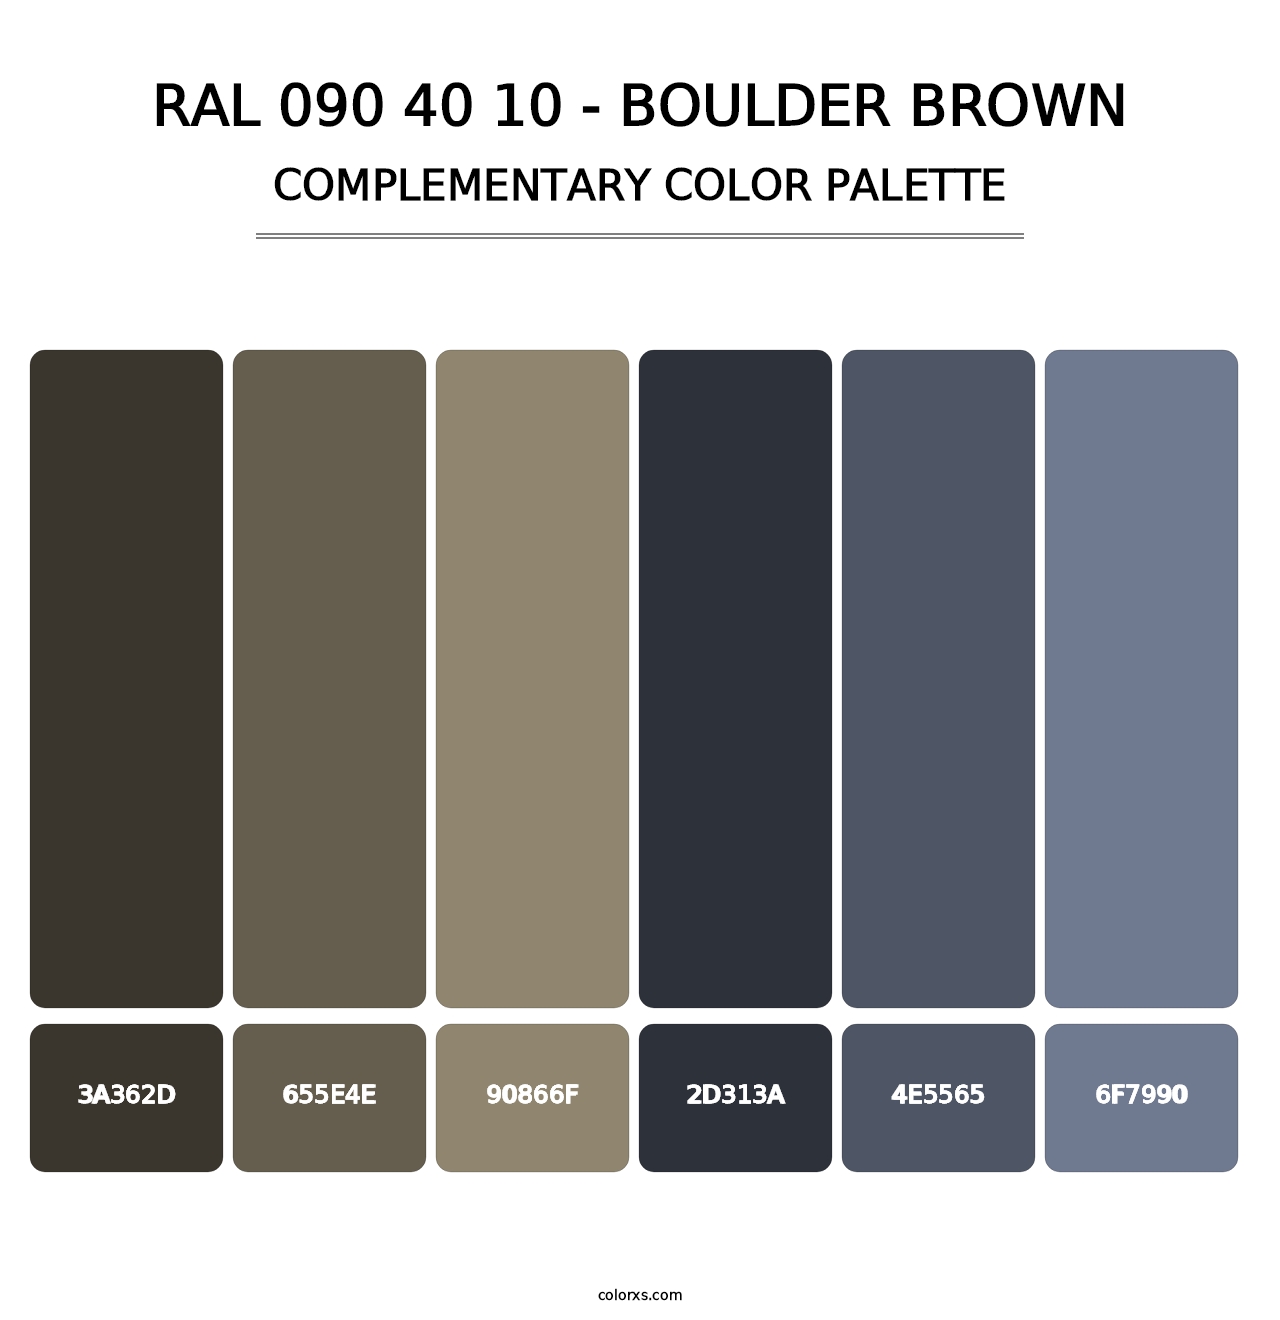 RAL 090 40 10 - Boulder Brown - Complementary Color Palette